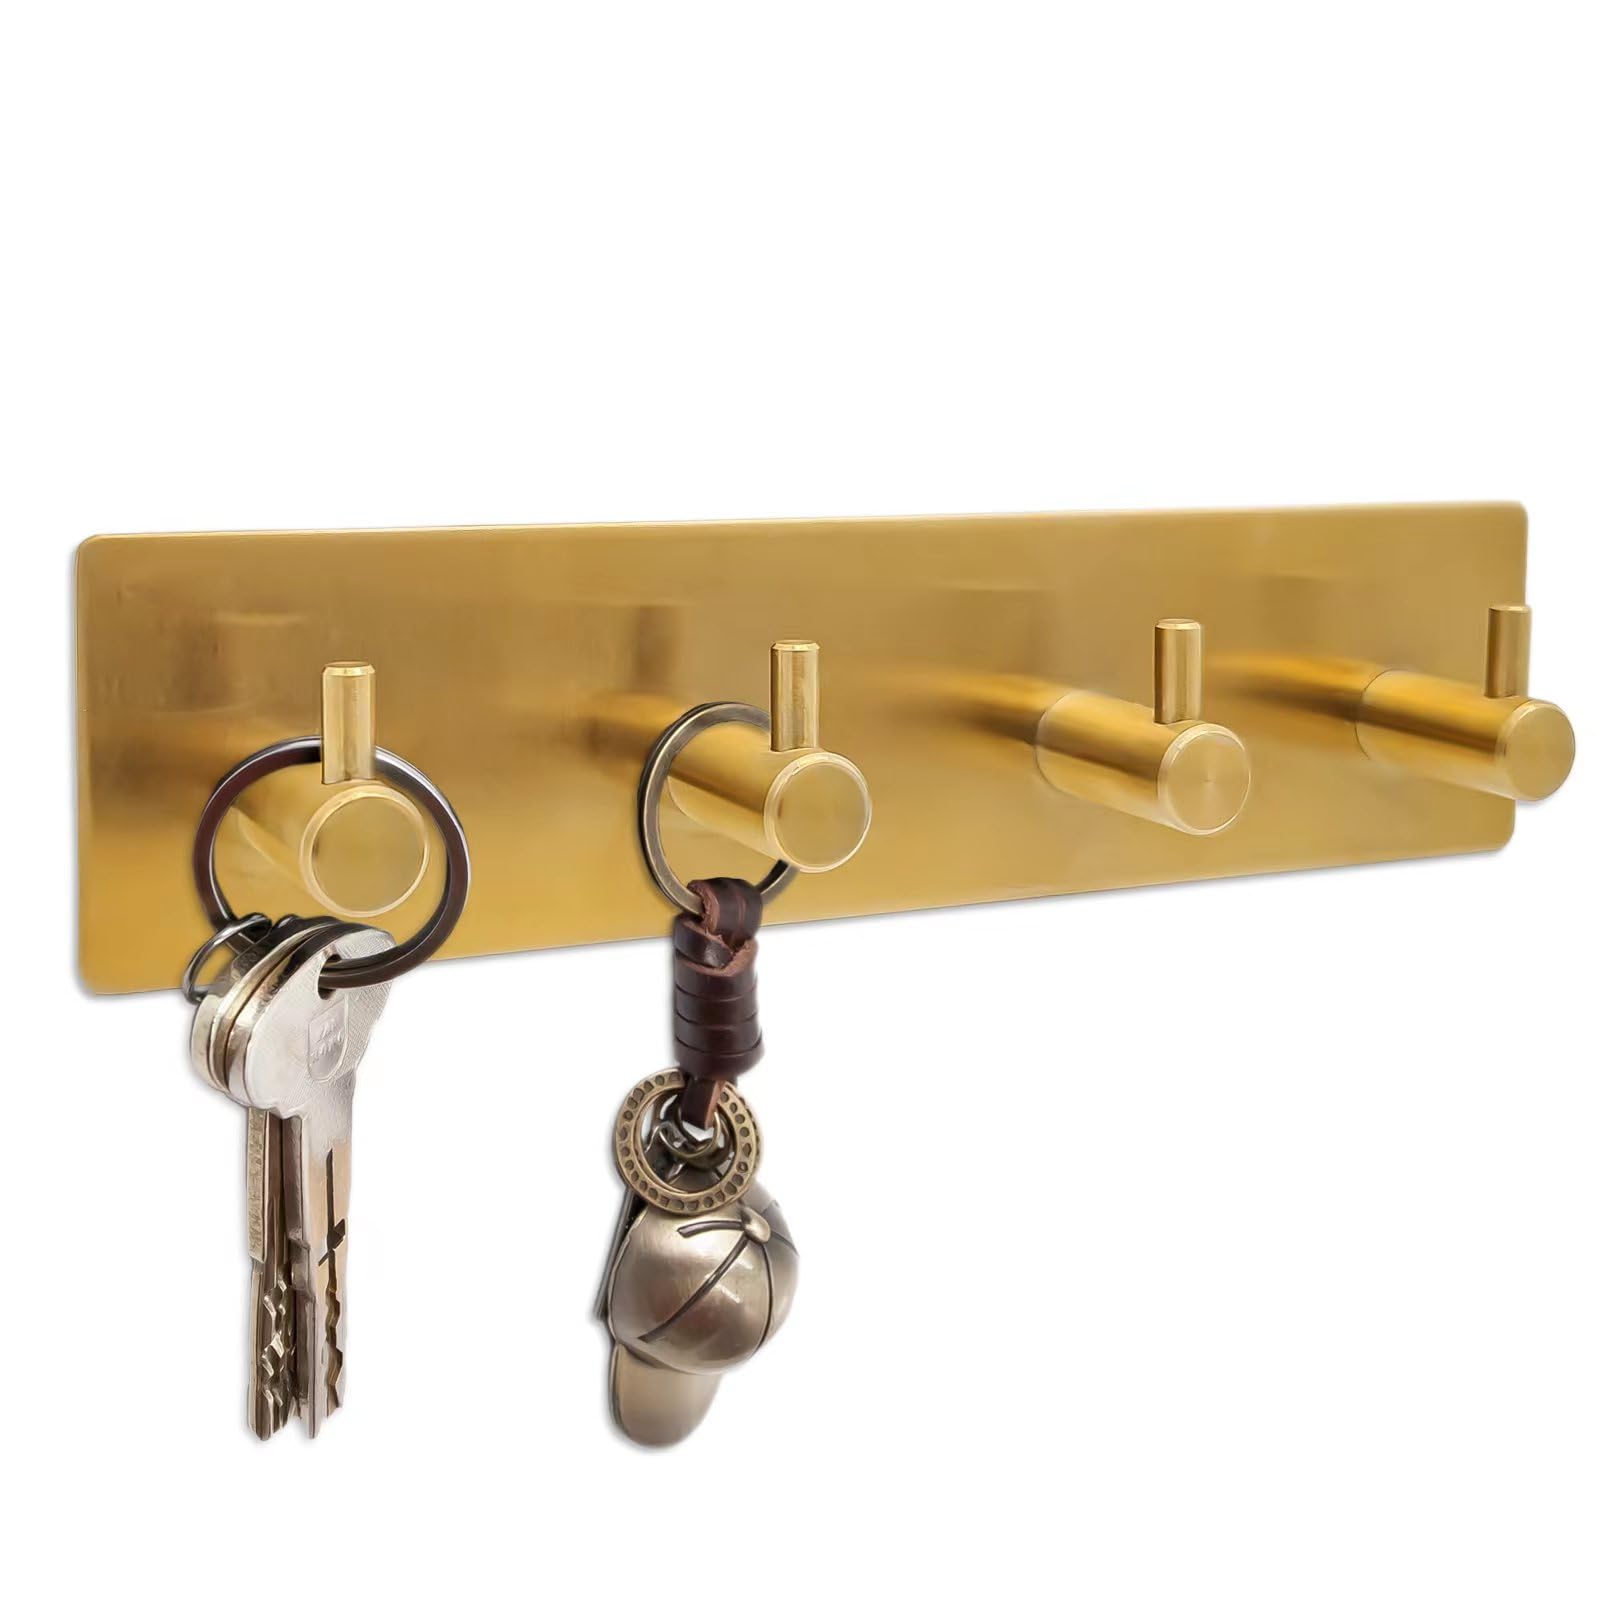 soclim Key Holder for Wall Self Adhesive Key Hook for Wall No Damage Key Rack for Wall with 4 Key Hooks for Keys and Masks, Key 